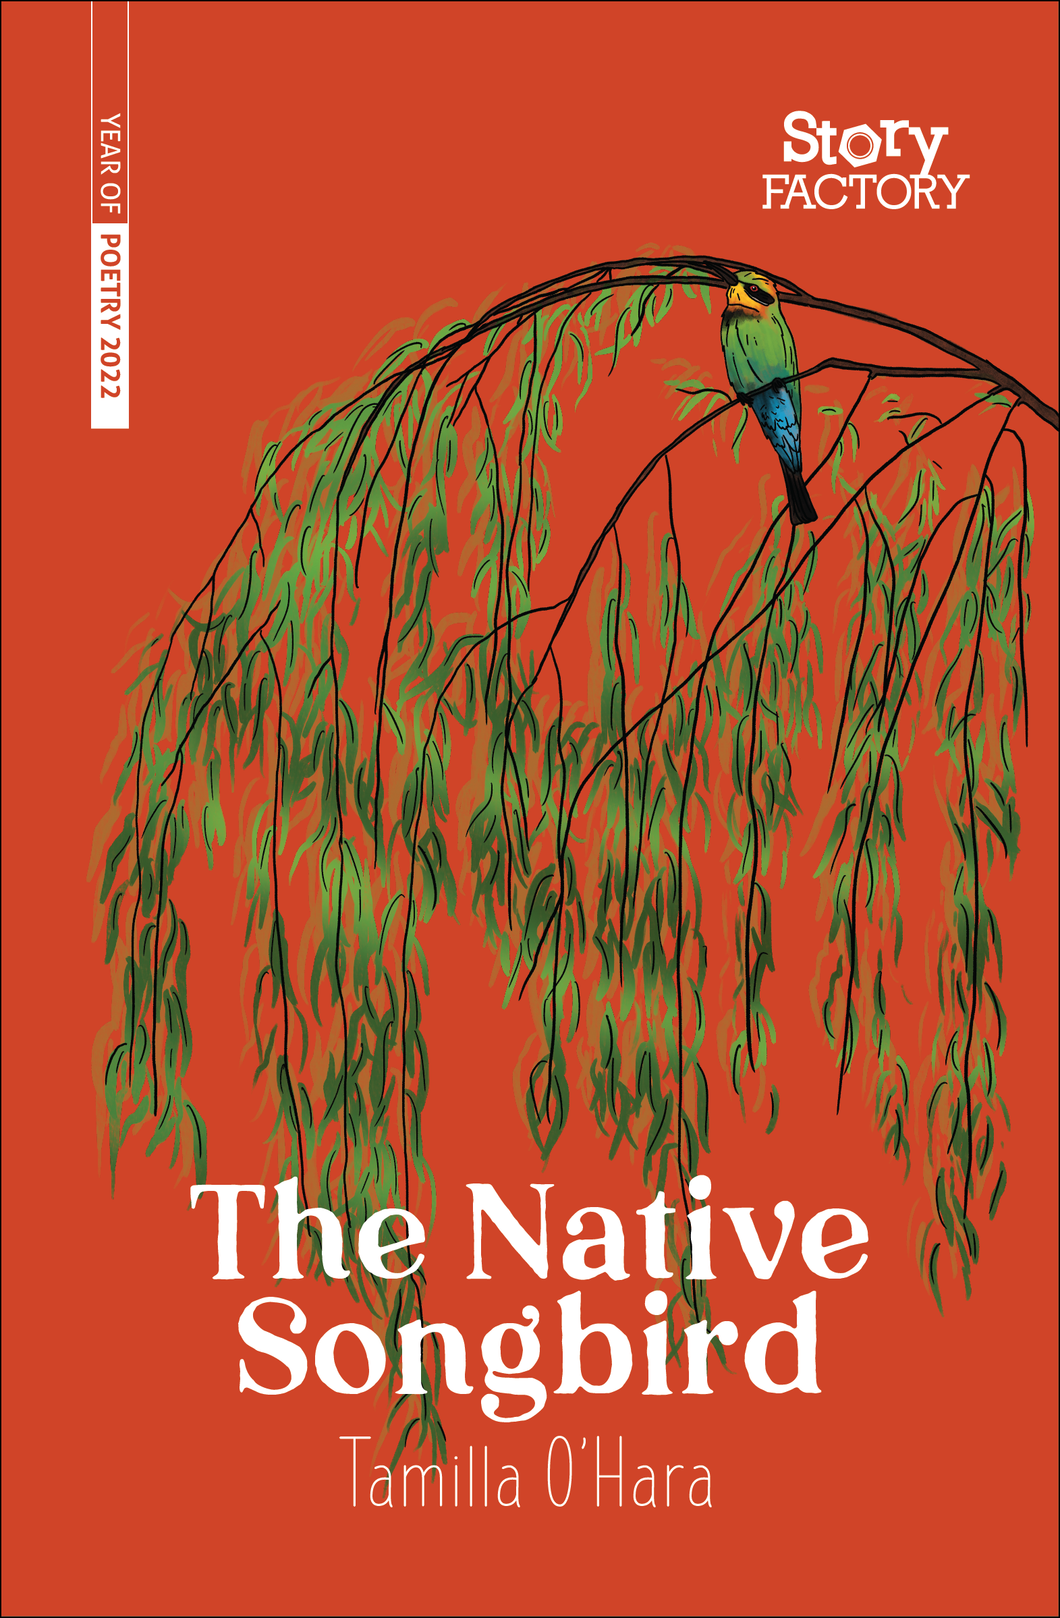 The Native Songbird by Tamilla O’Hara